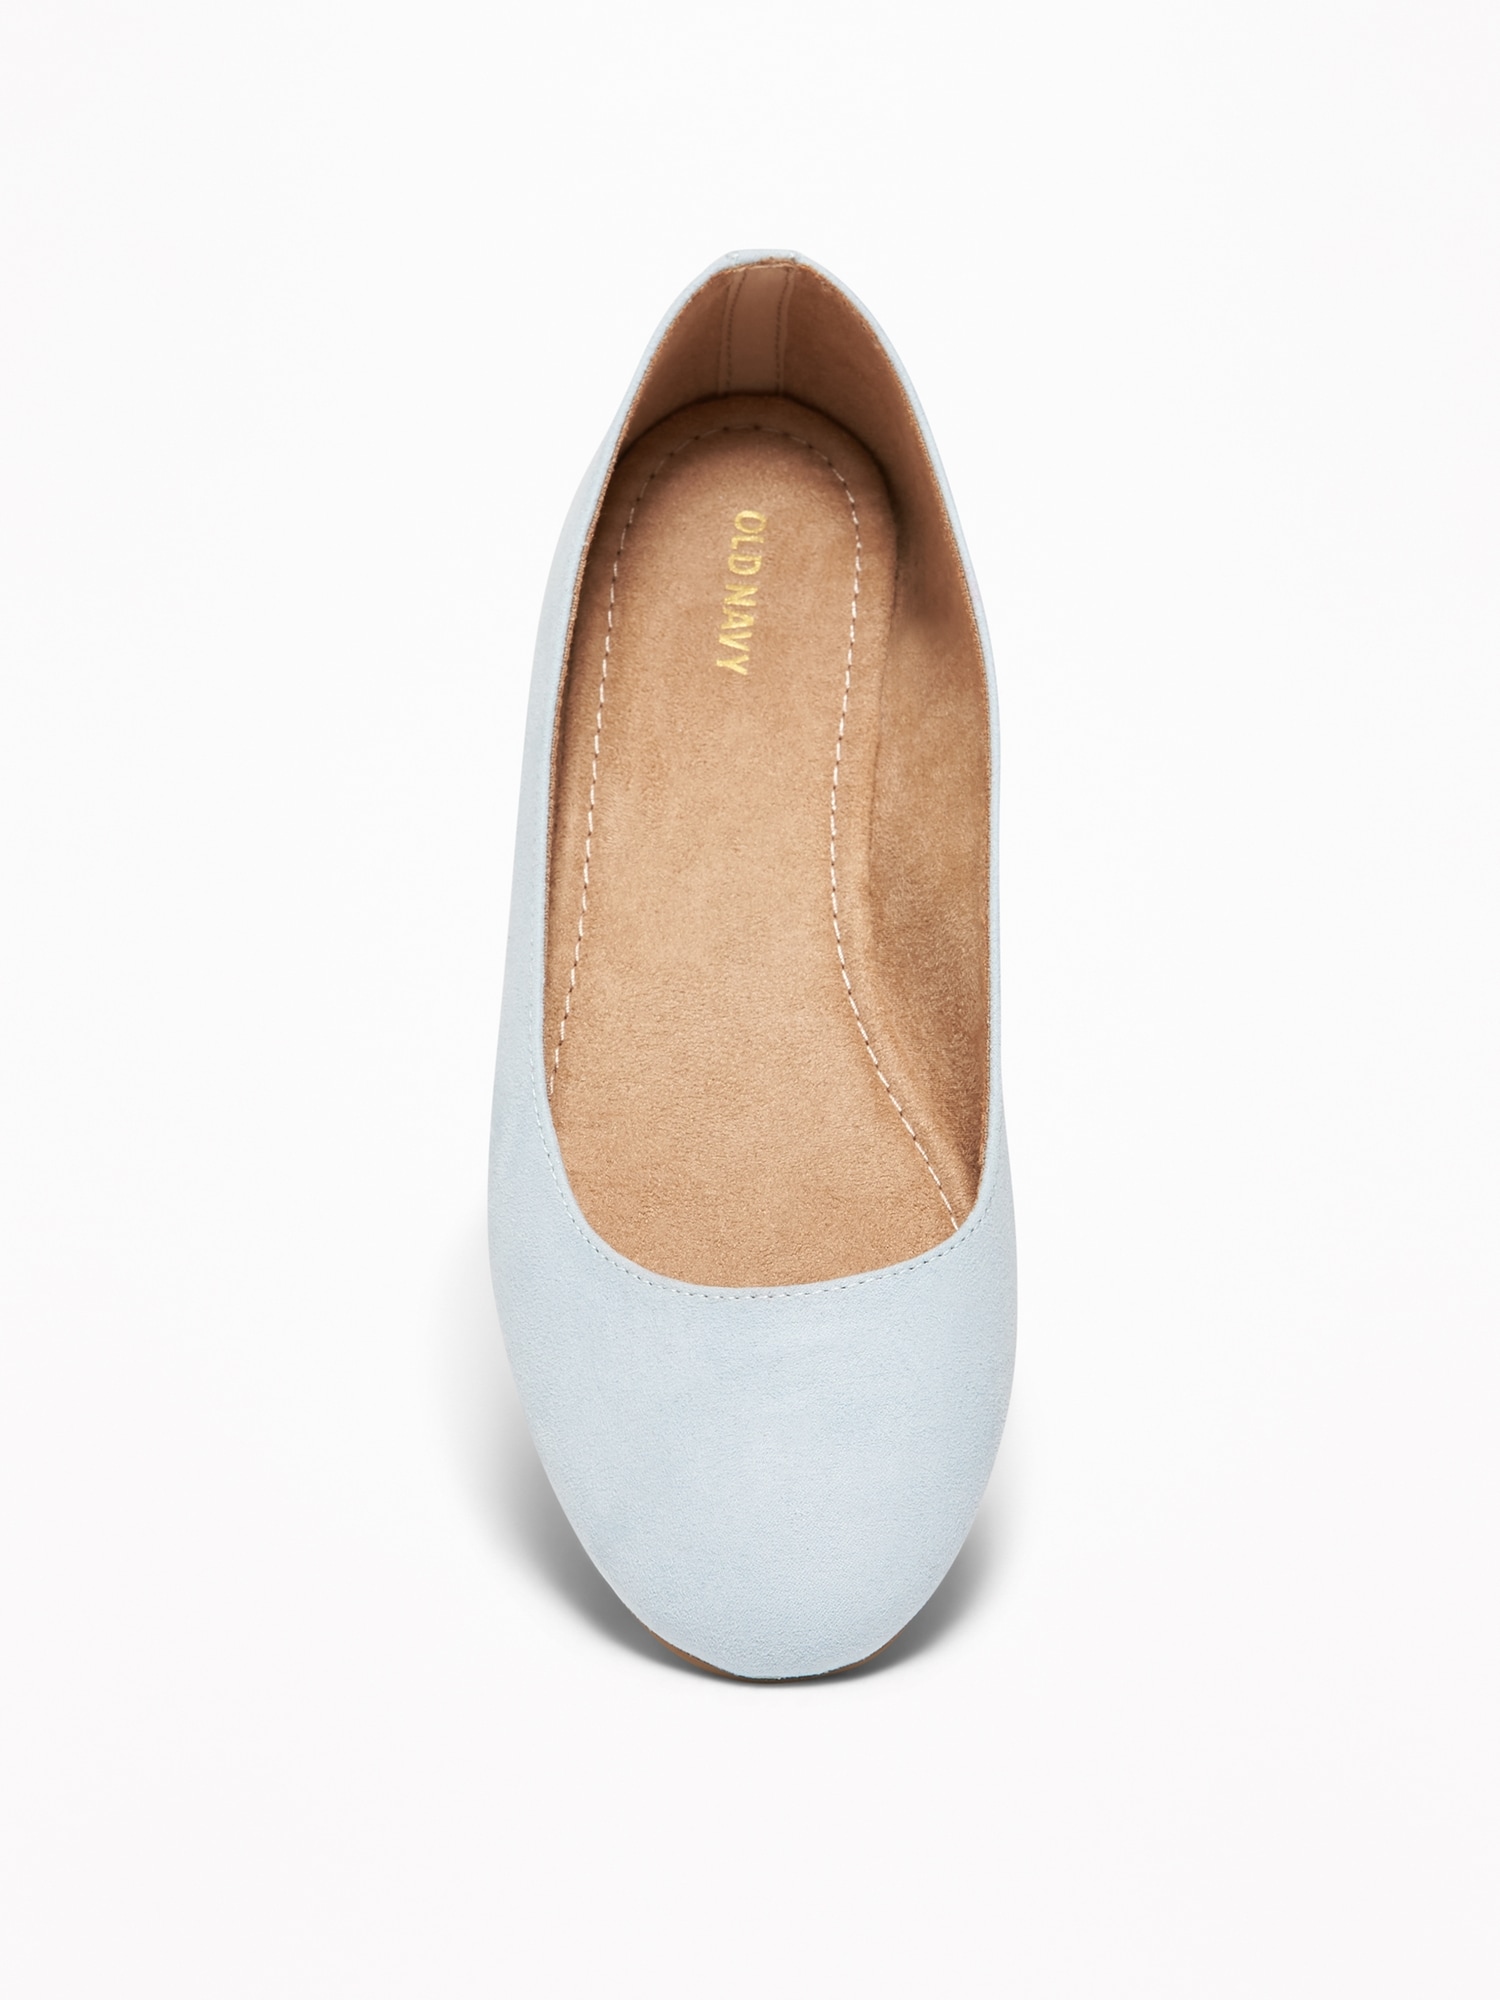 navy blue ballerina shoes